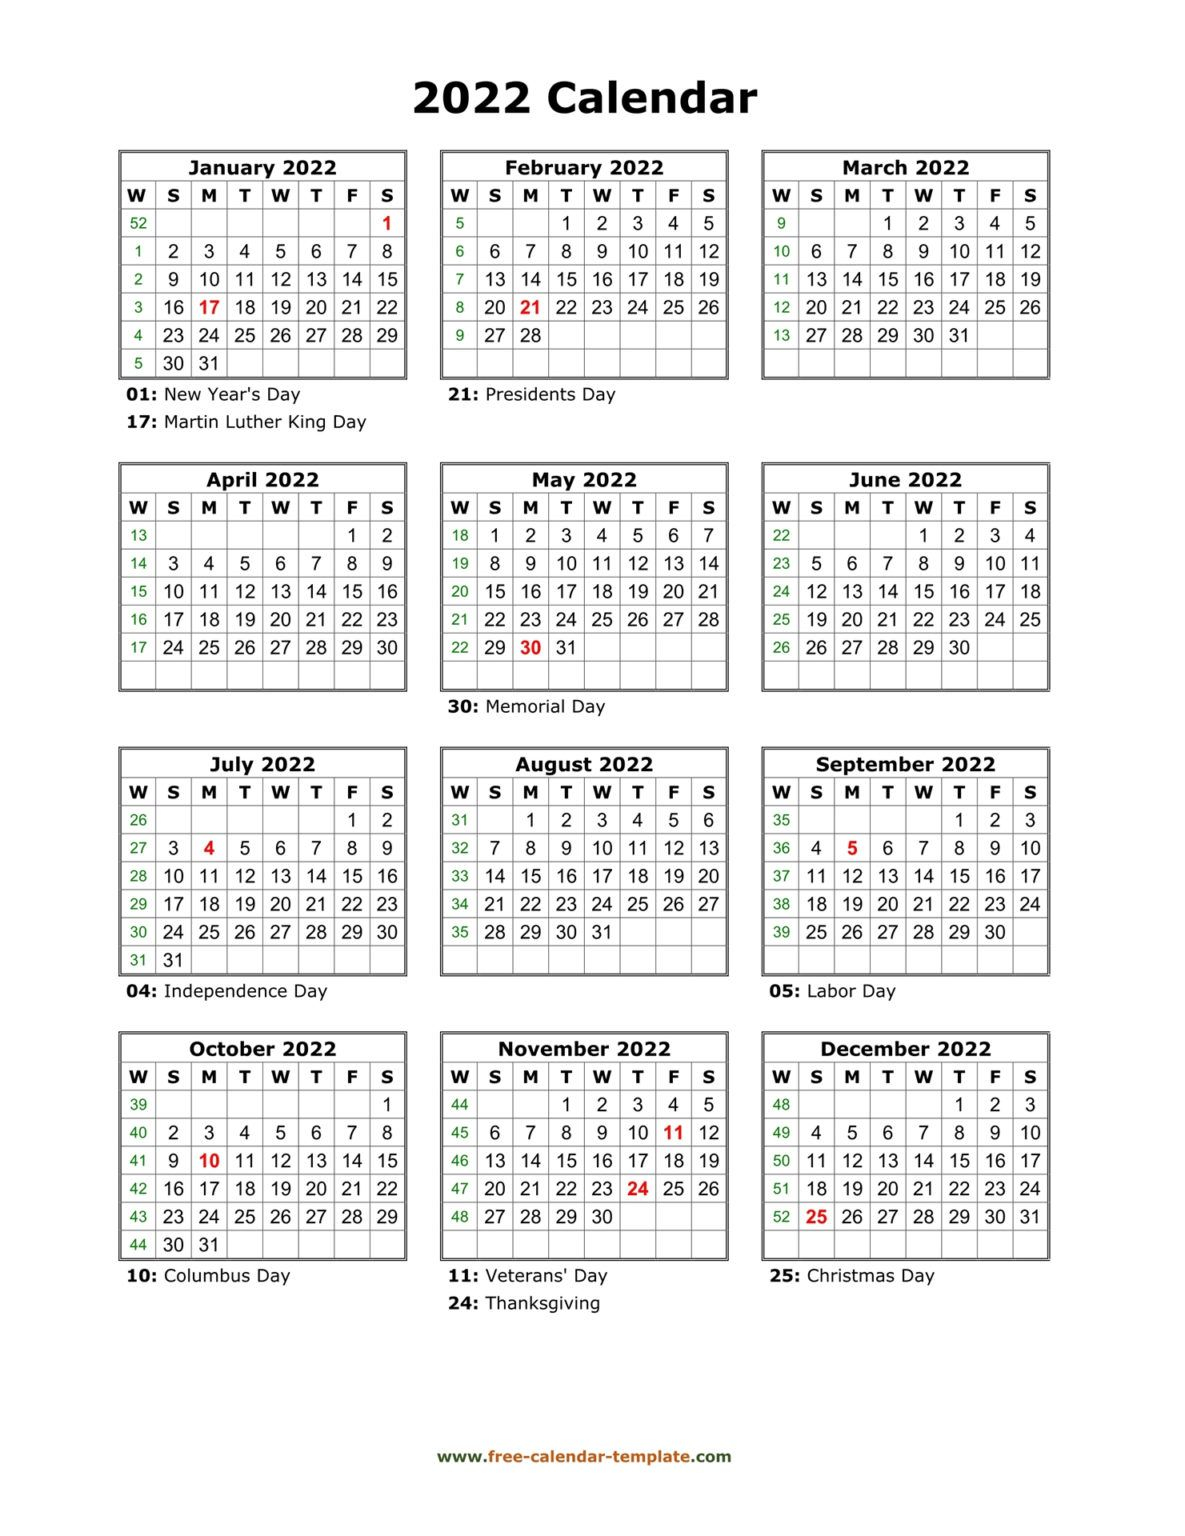 2022 Calendar Template Queensland